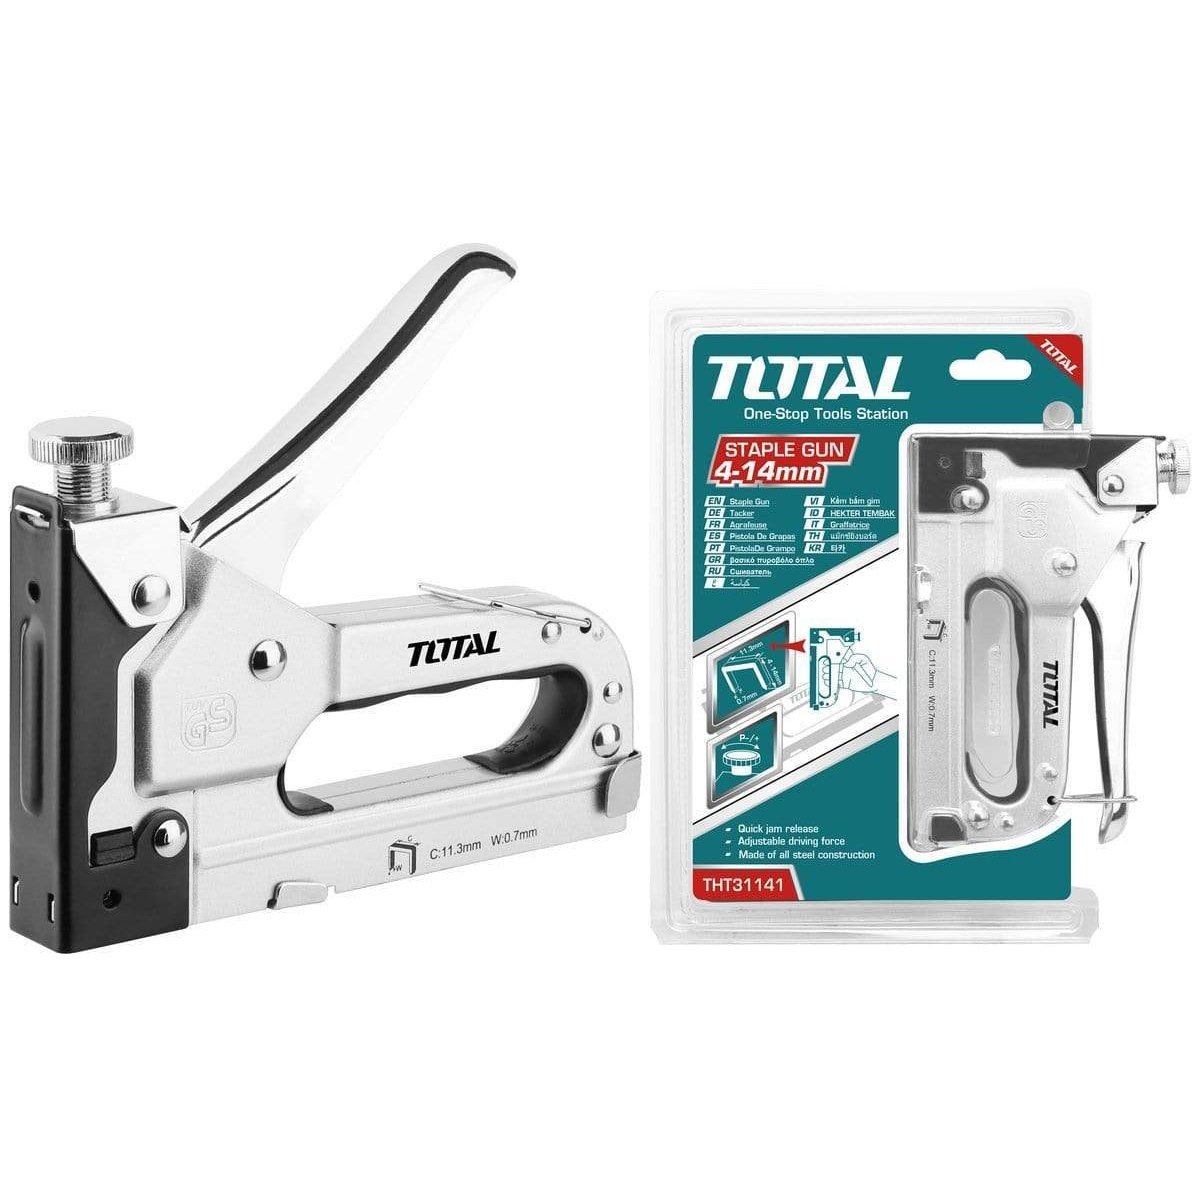 Total Staple Gun 4 - 14mm - THT31141 | Supply Master | Accra, Ghana Tools Building Steel Engineering Hardware tool